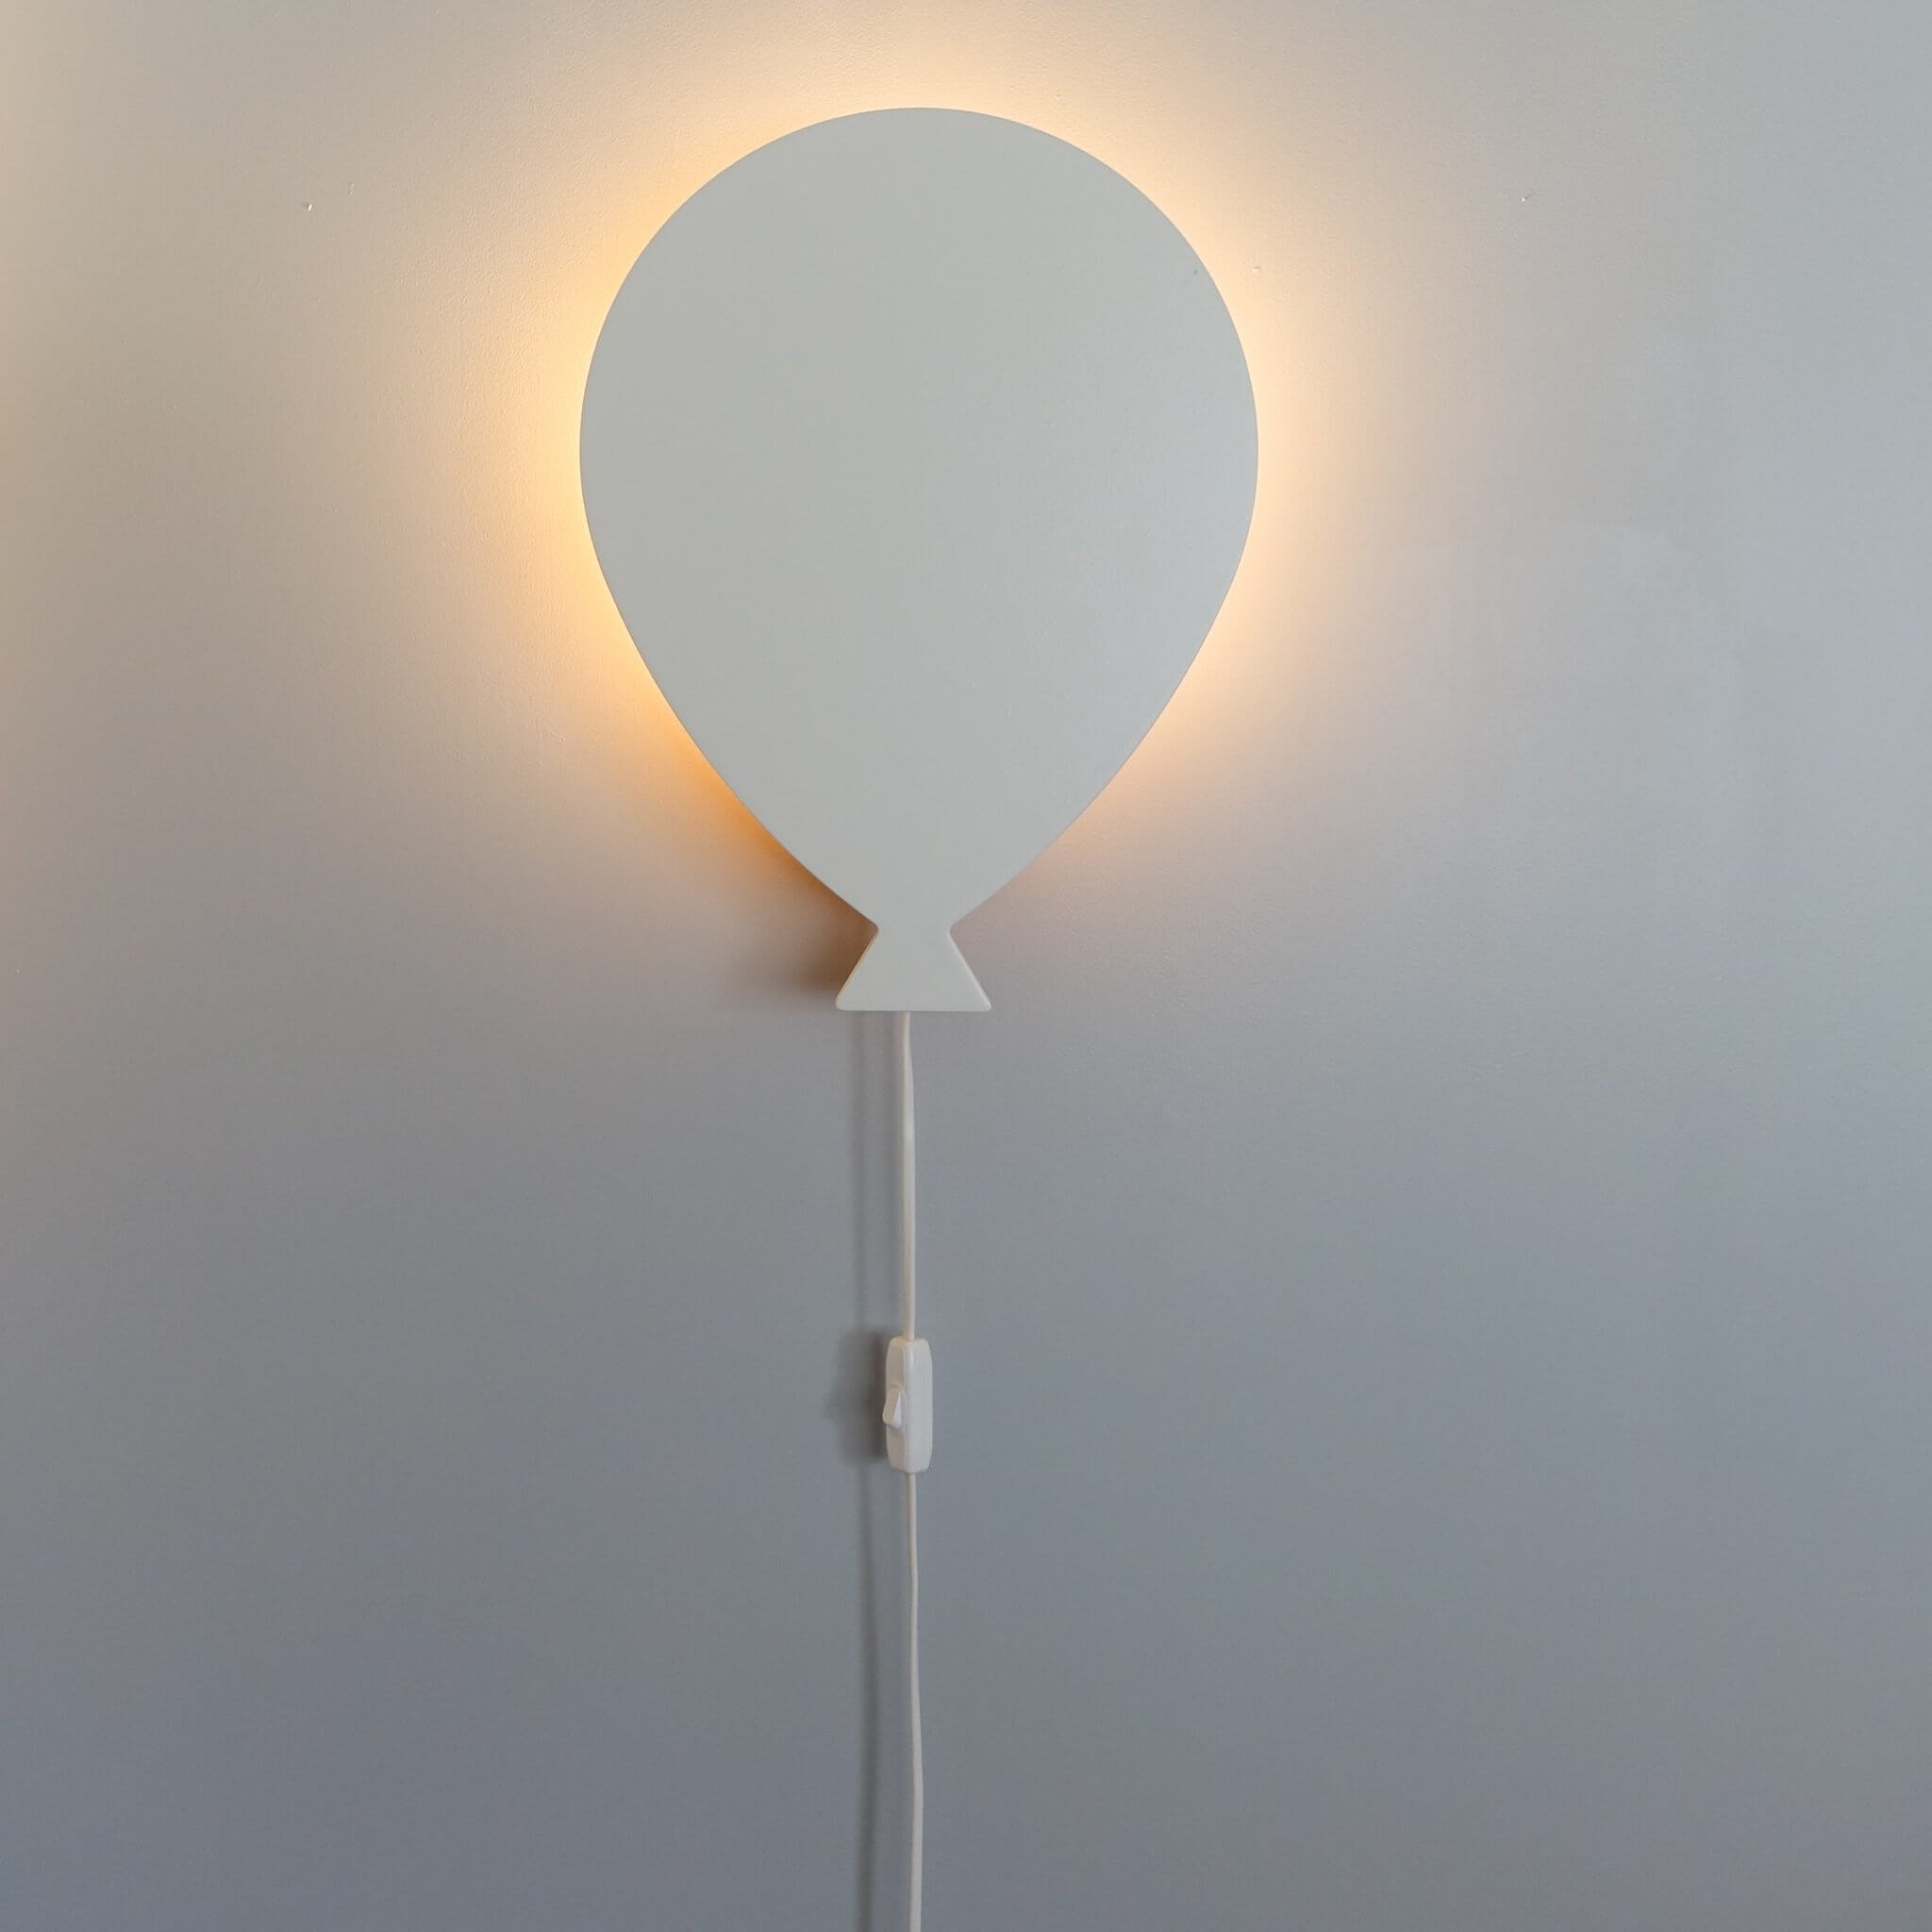 Wooden children’s room wall lamp | Balloon - White - toddie.com